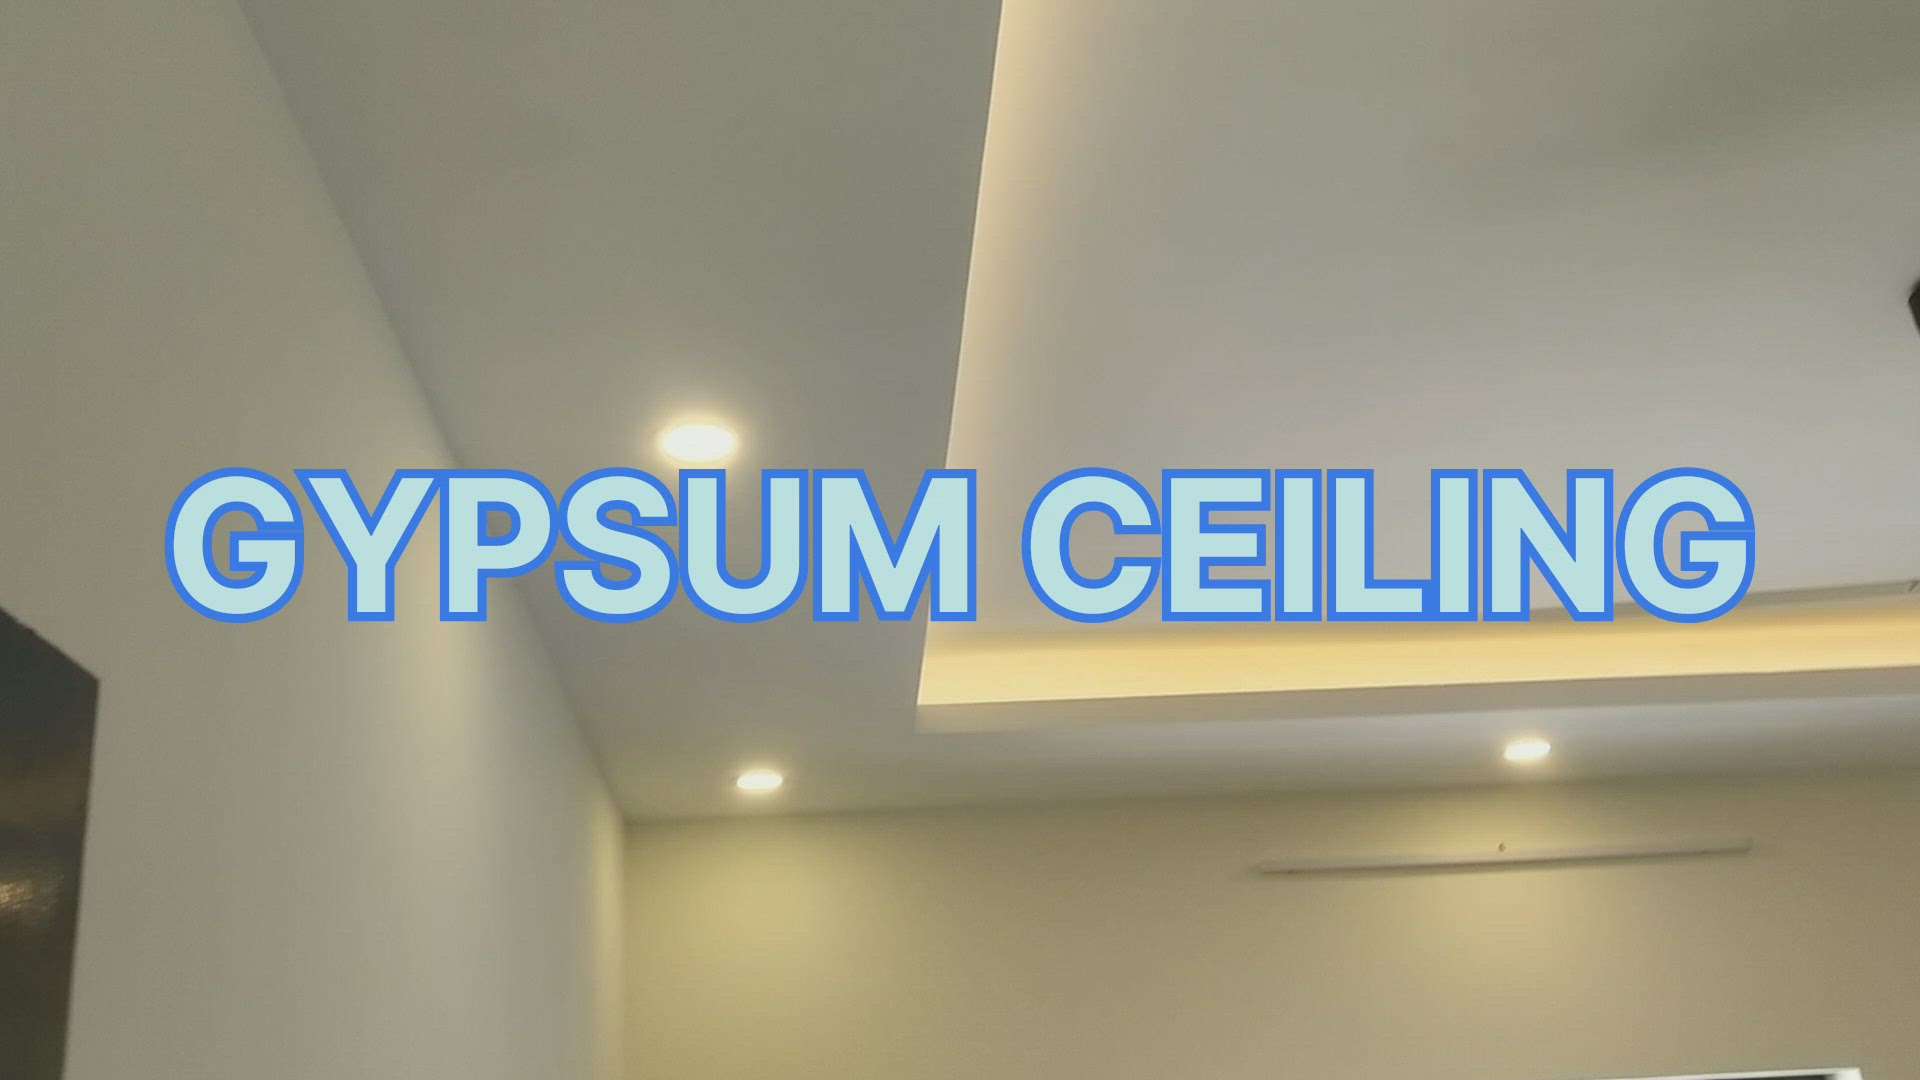 #Gypsum ceiling.
# Modular kitchen.
# kerala interior designer.
# interior designer.
#GypsumCeiling.
8921596939